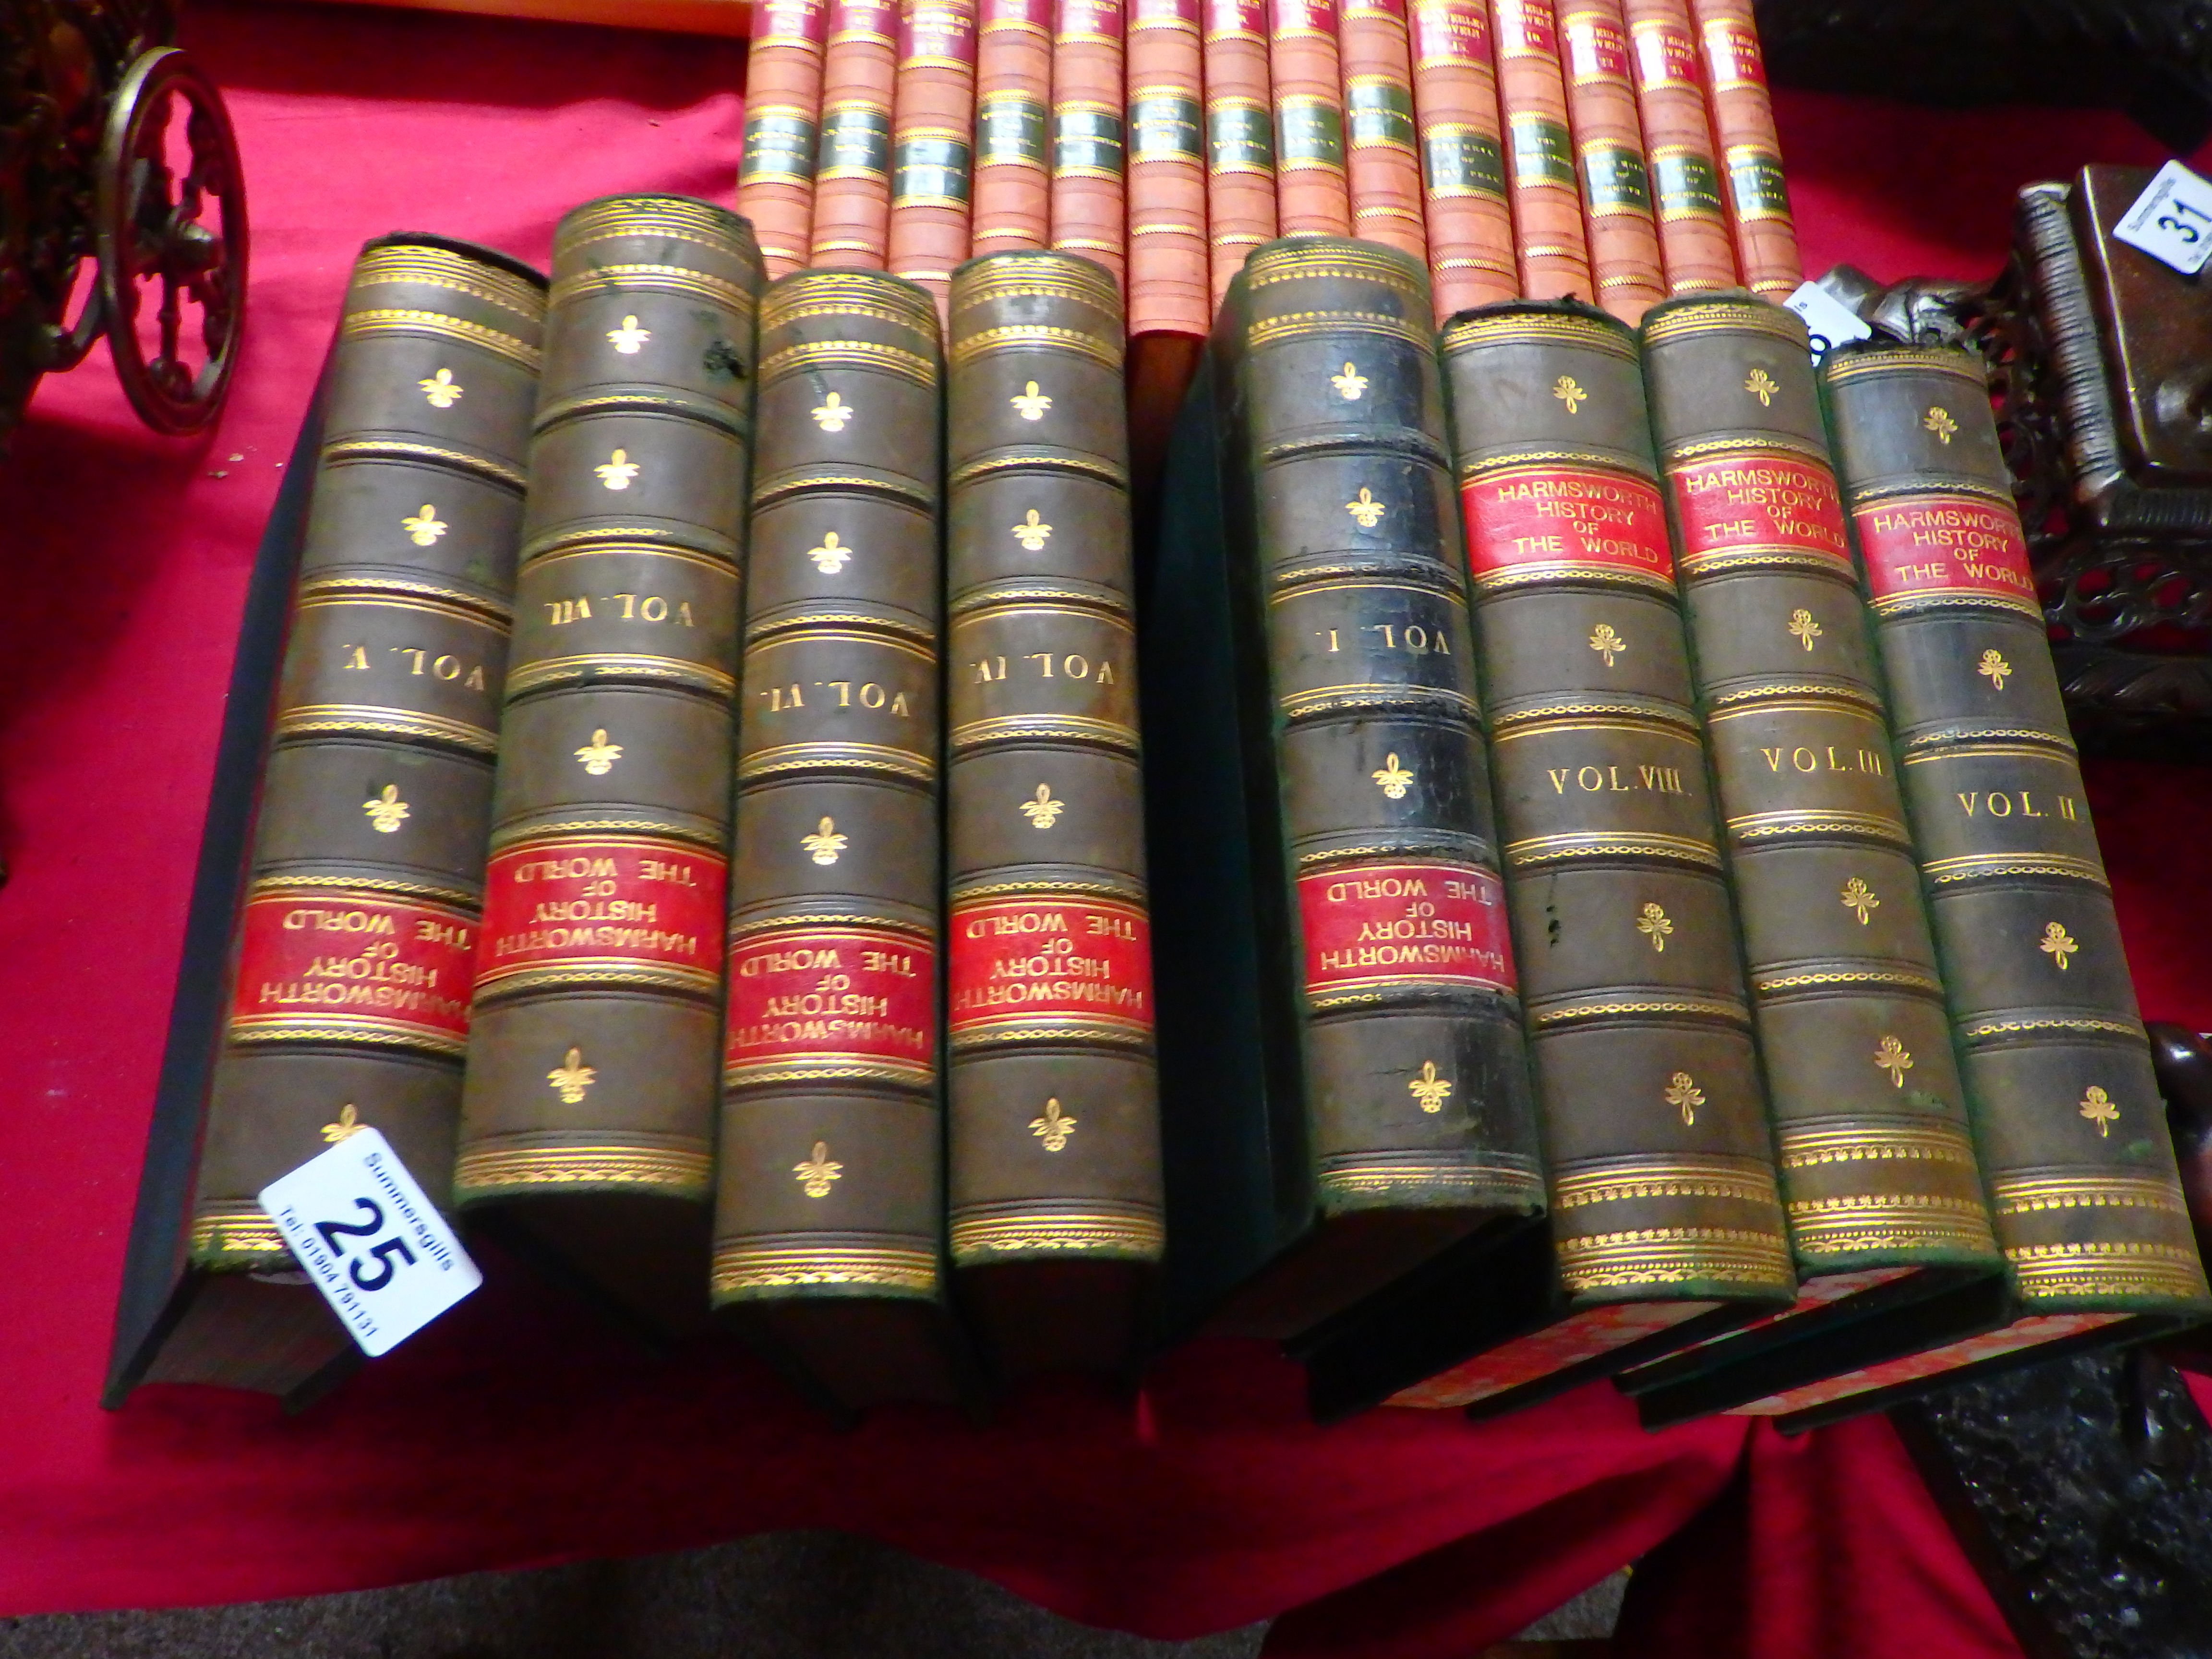 Harmsworth History of the World vols I - VIII